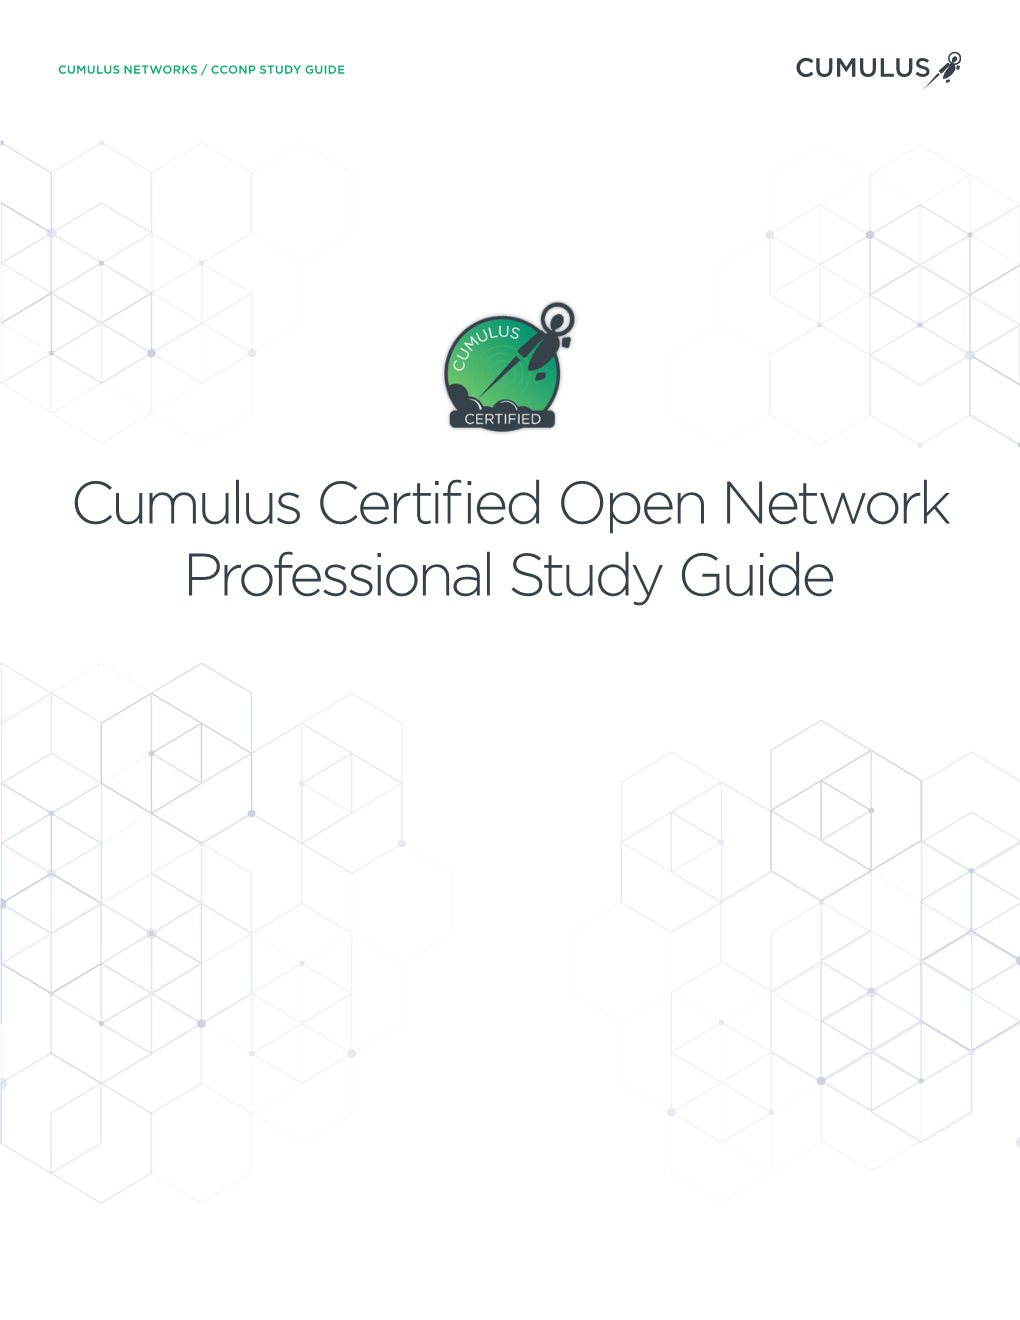 Cumulus Certified Open Network Professional Study Guide CUMULUS NETWORKS / CCONP STUDY GUIDE